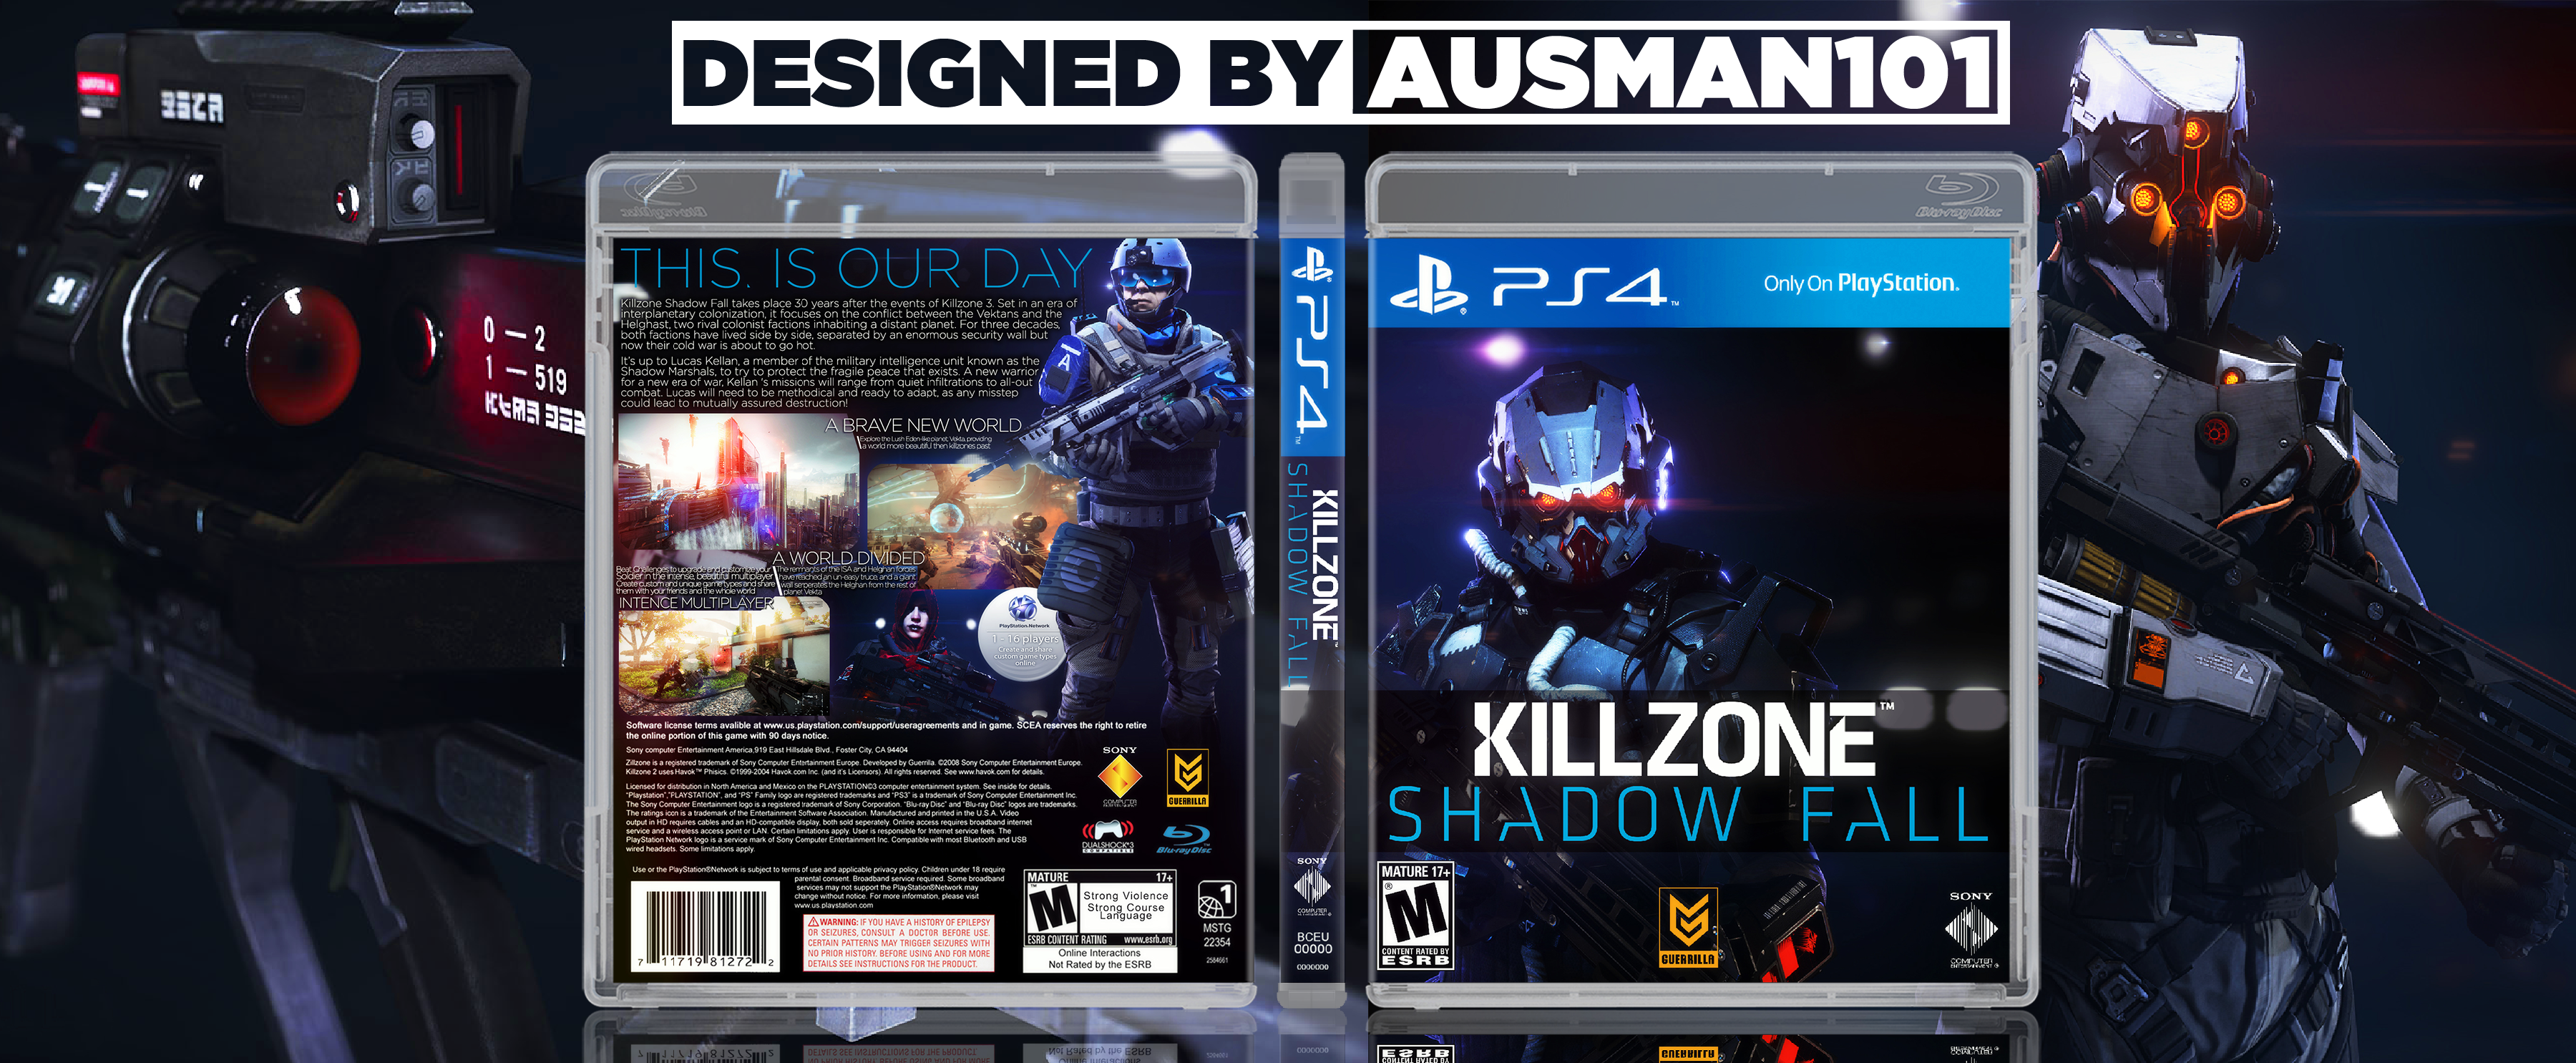 Killzone Shadow Fall box cover